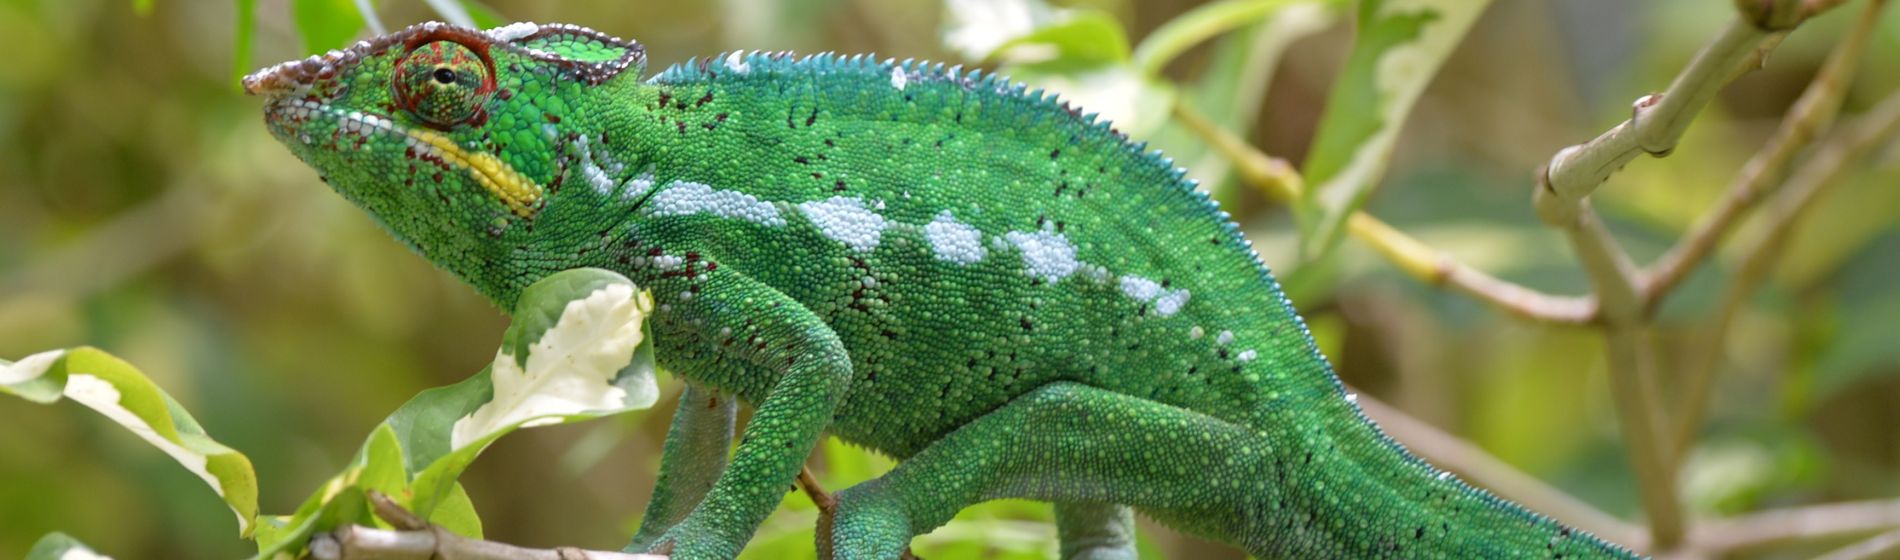 la_r_union_green_chameleon.jpg